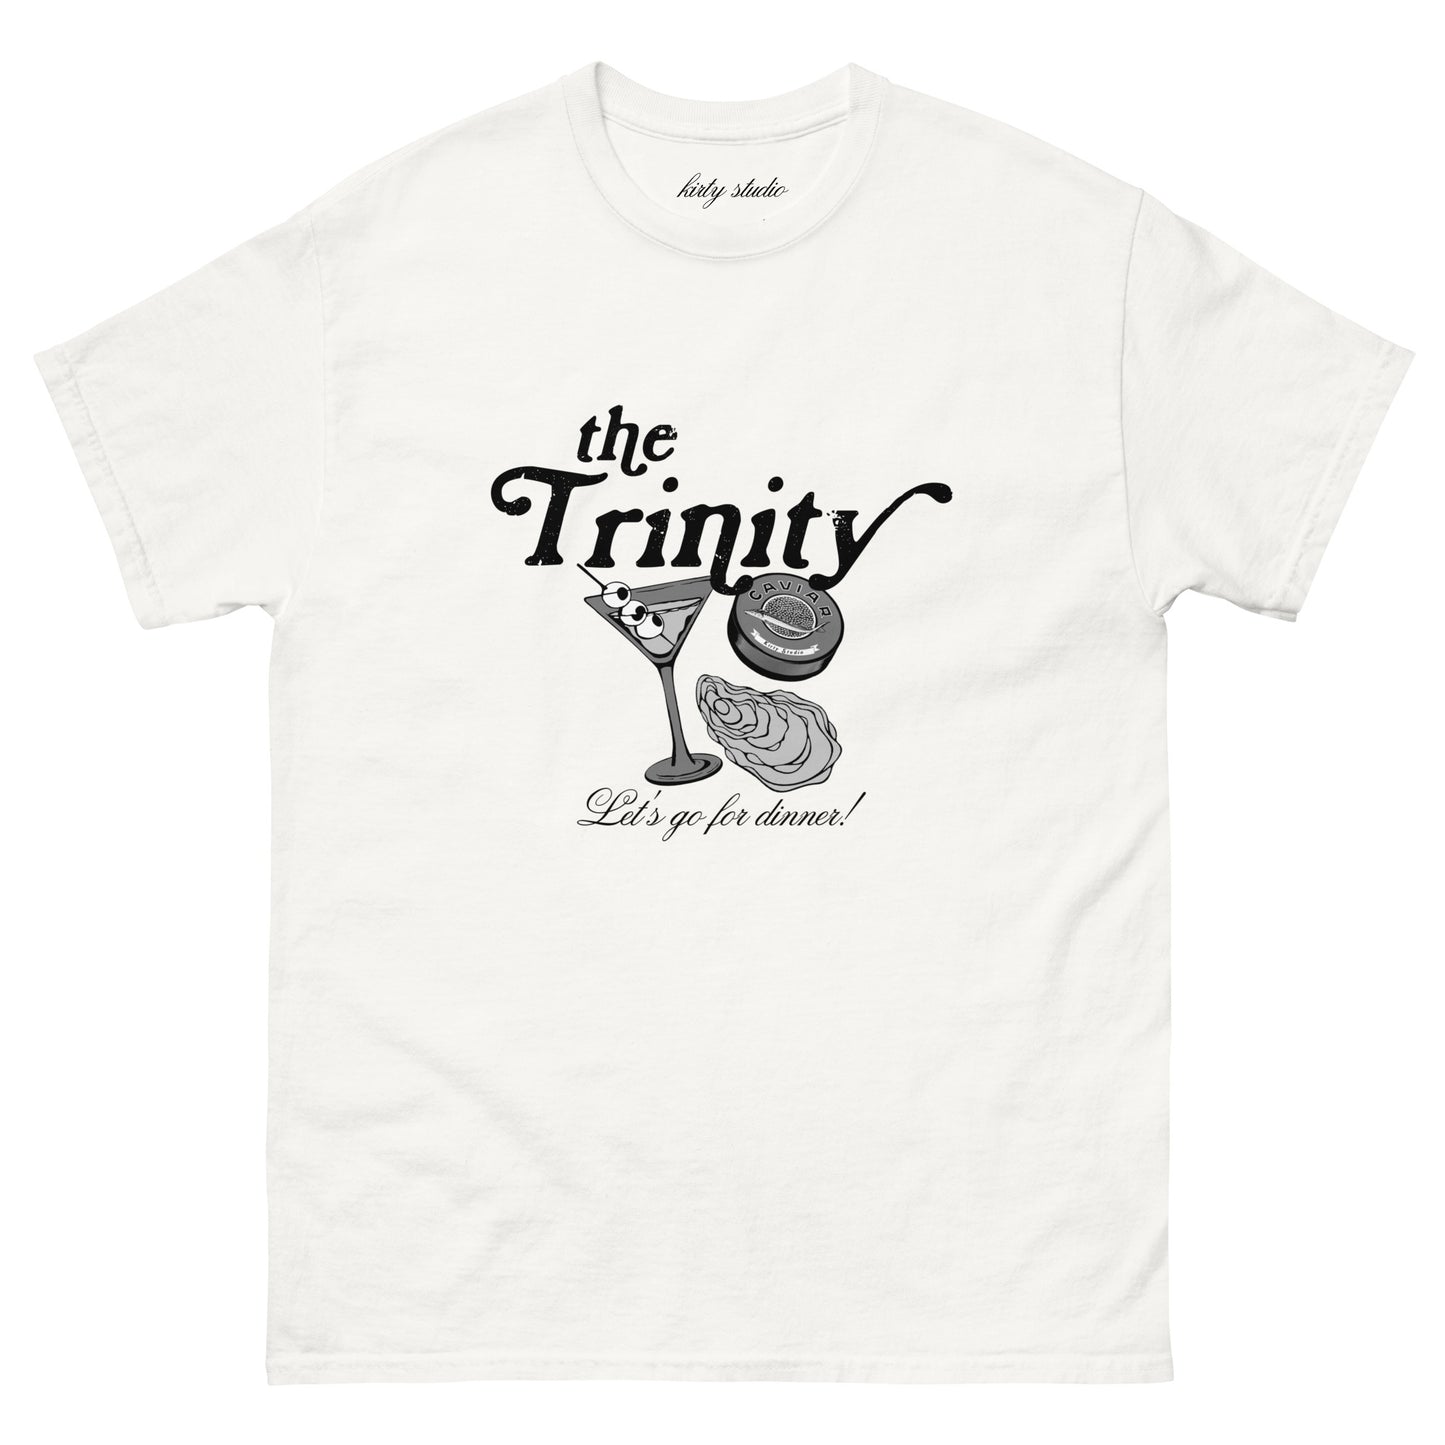 'The Trinity' Tee - Black & White